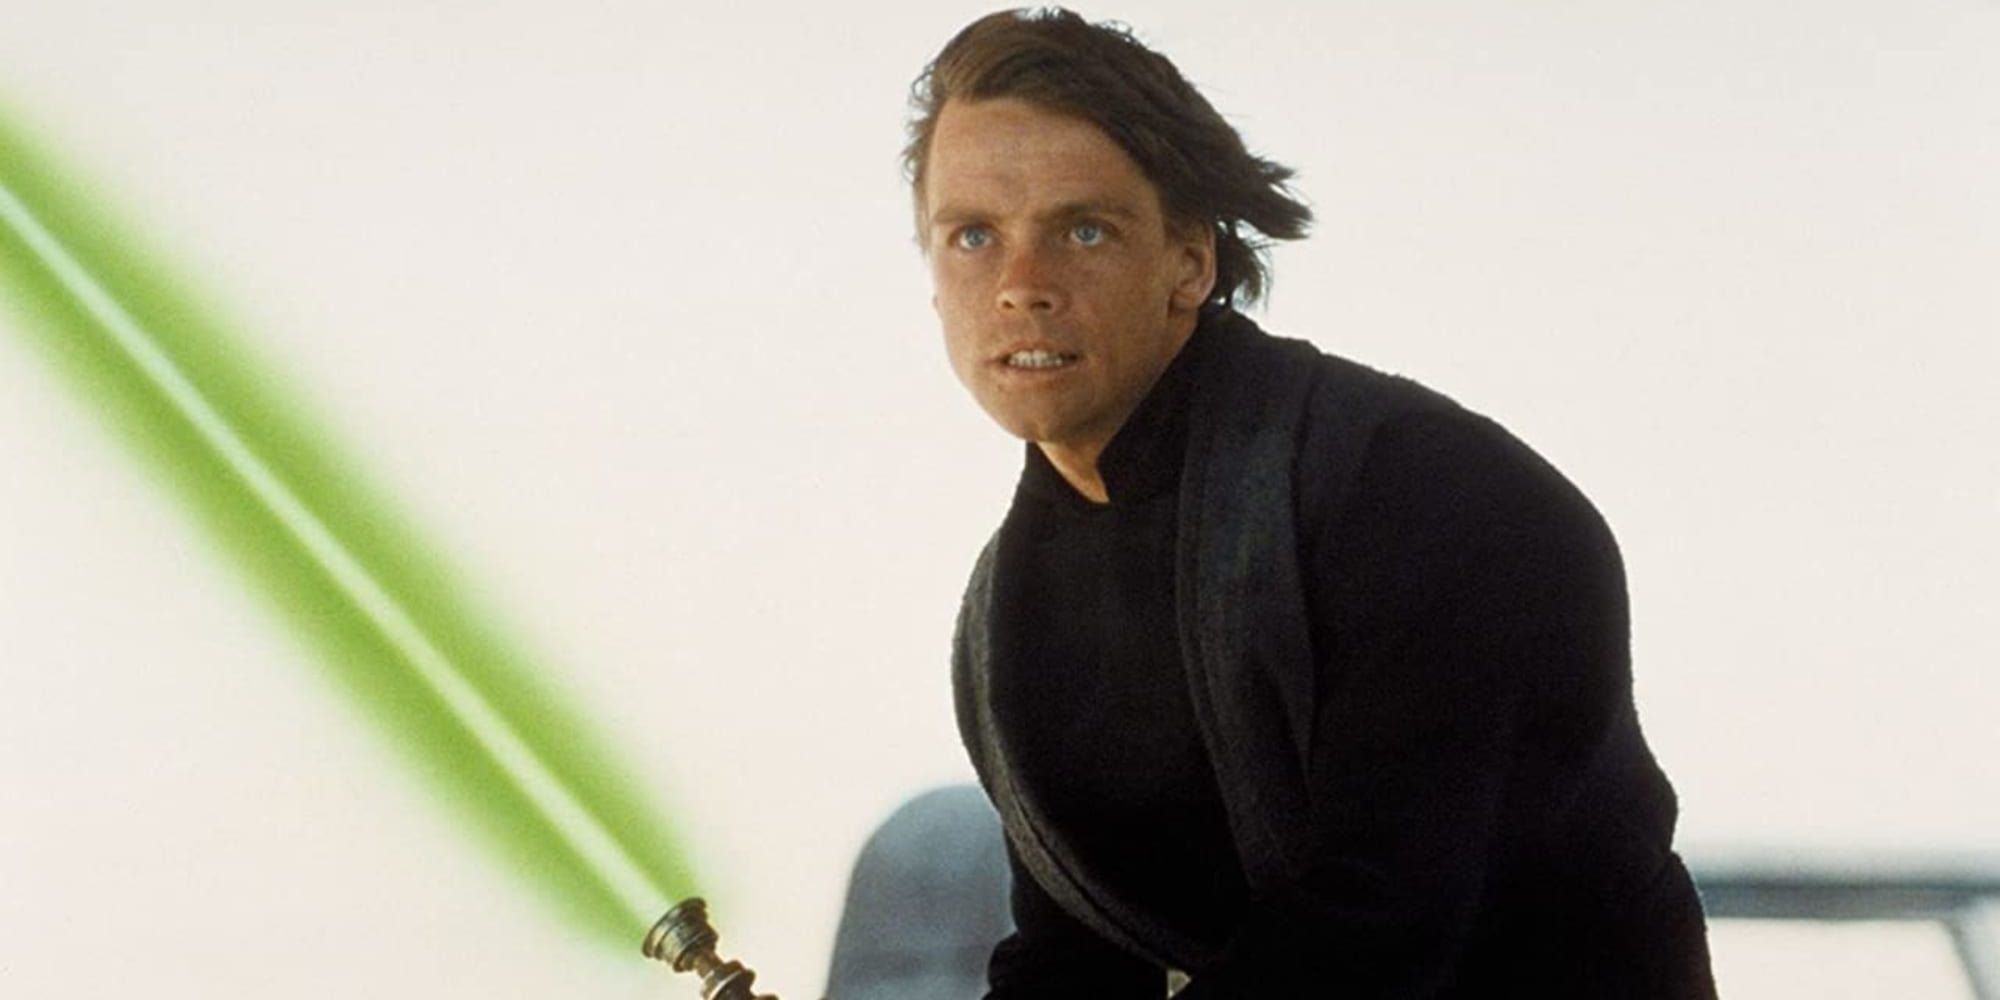 Luke Skywalker with a green lightsaber in Return of the Jedi